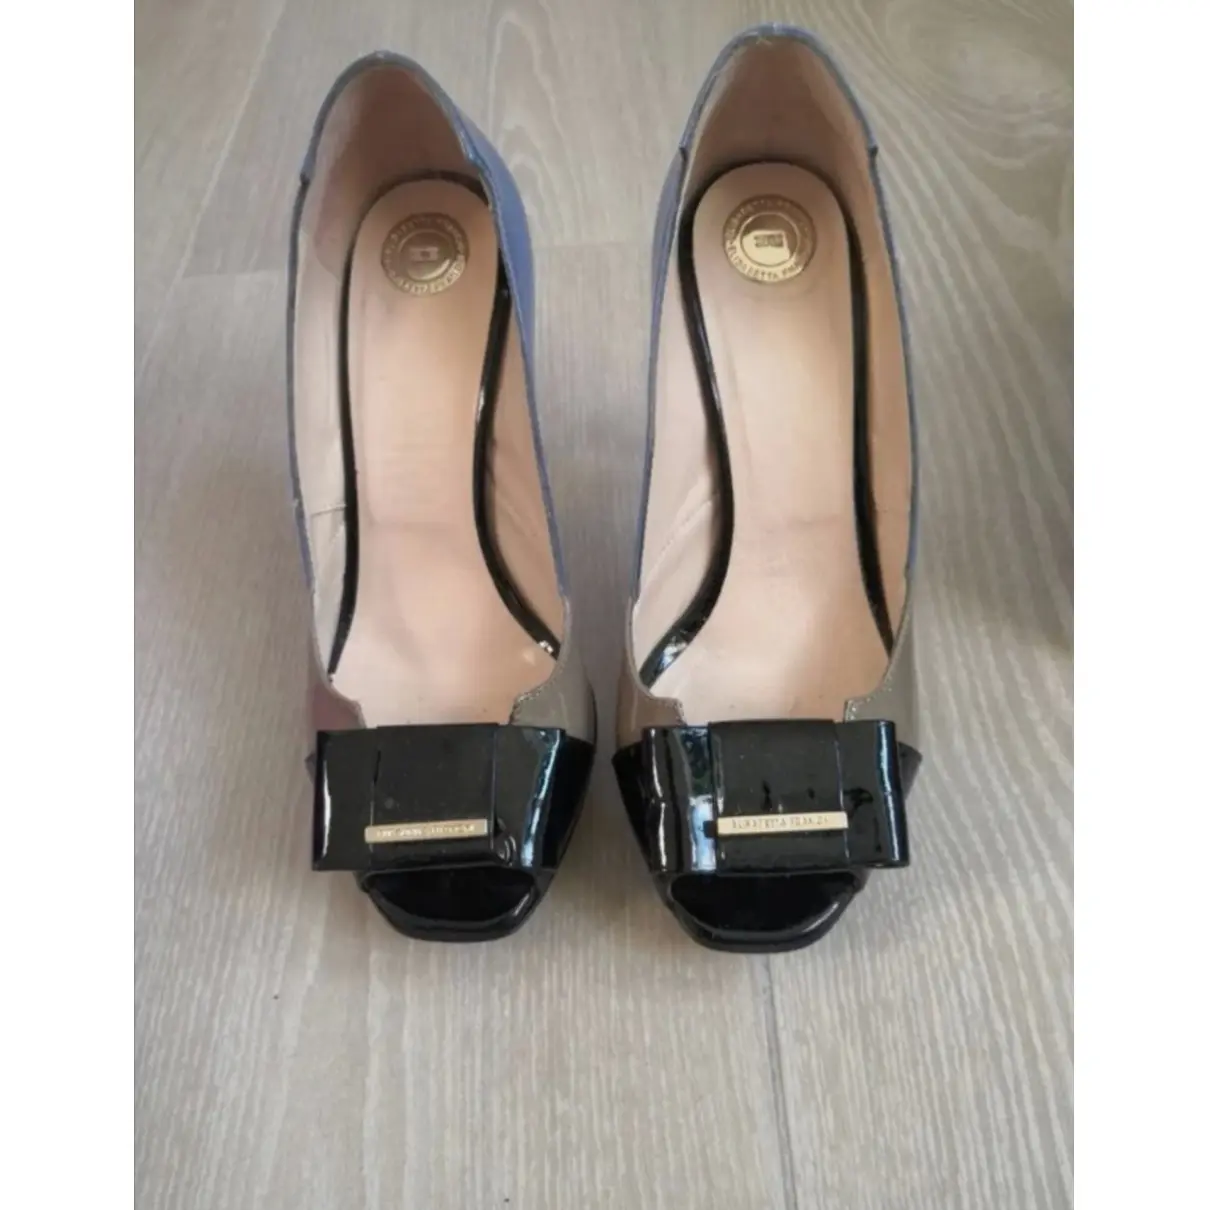 Buy Elisabetta Franchi Patent leather heels online